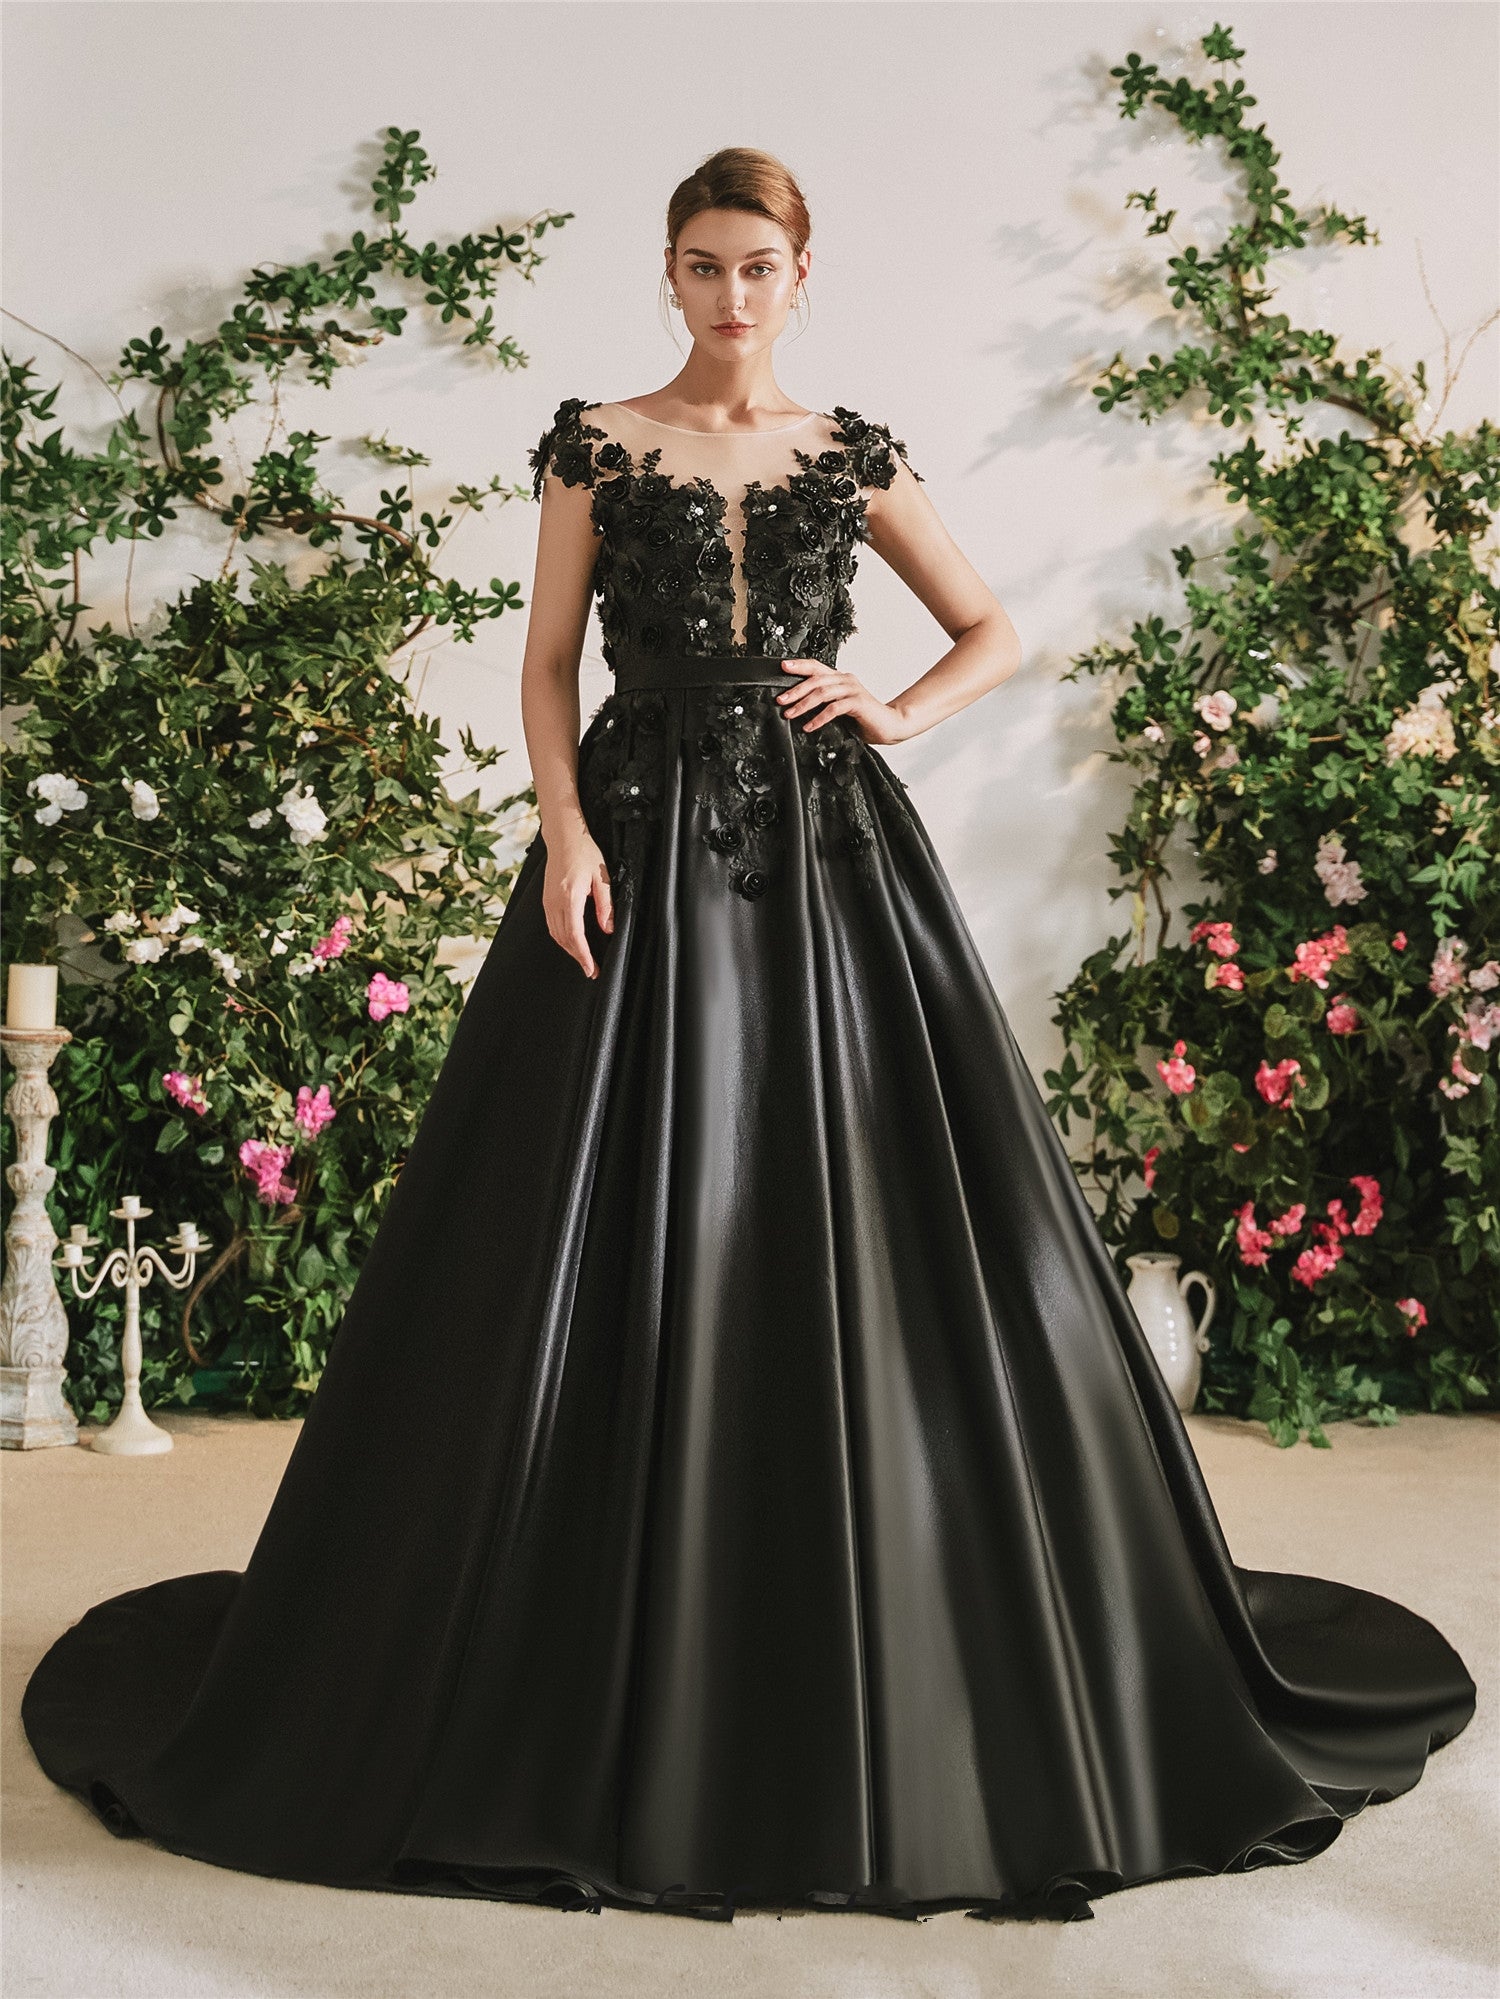 The Rare Black Rose Wedding Dress